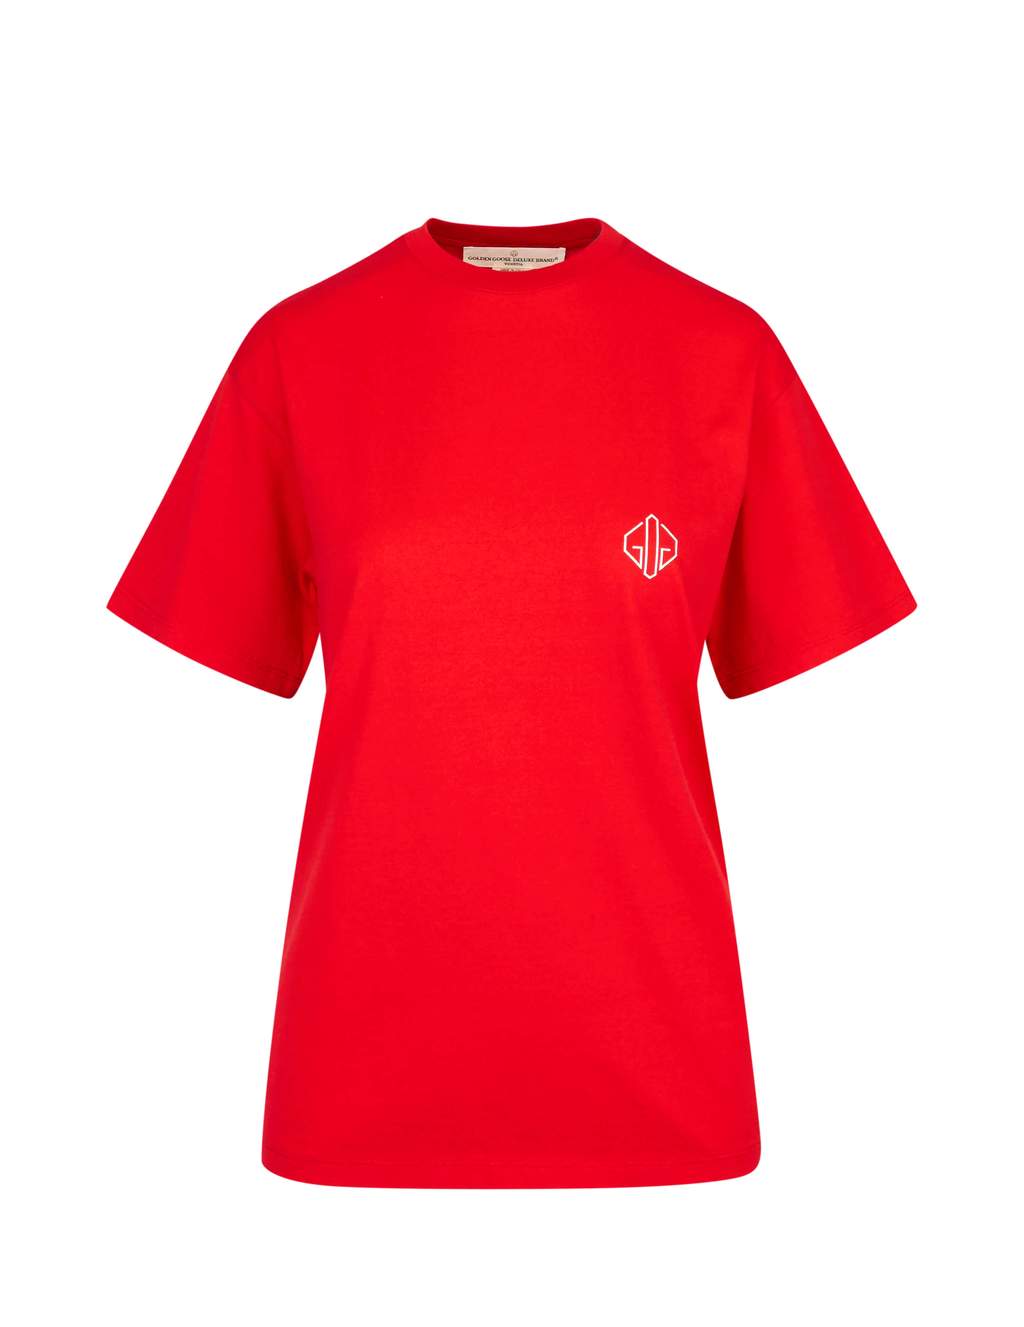 Goose Clothing Logo - Golden Goose Deluxe Brand Women's Red Logo T Shirt. GIULIOFASHION